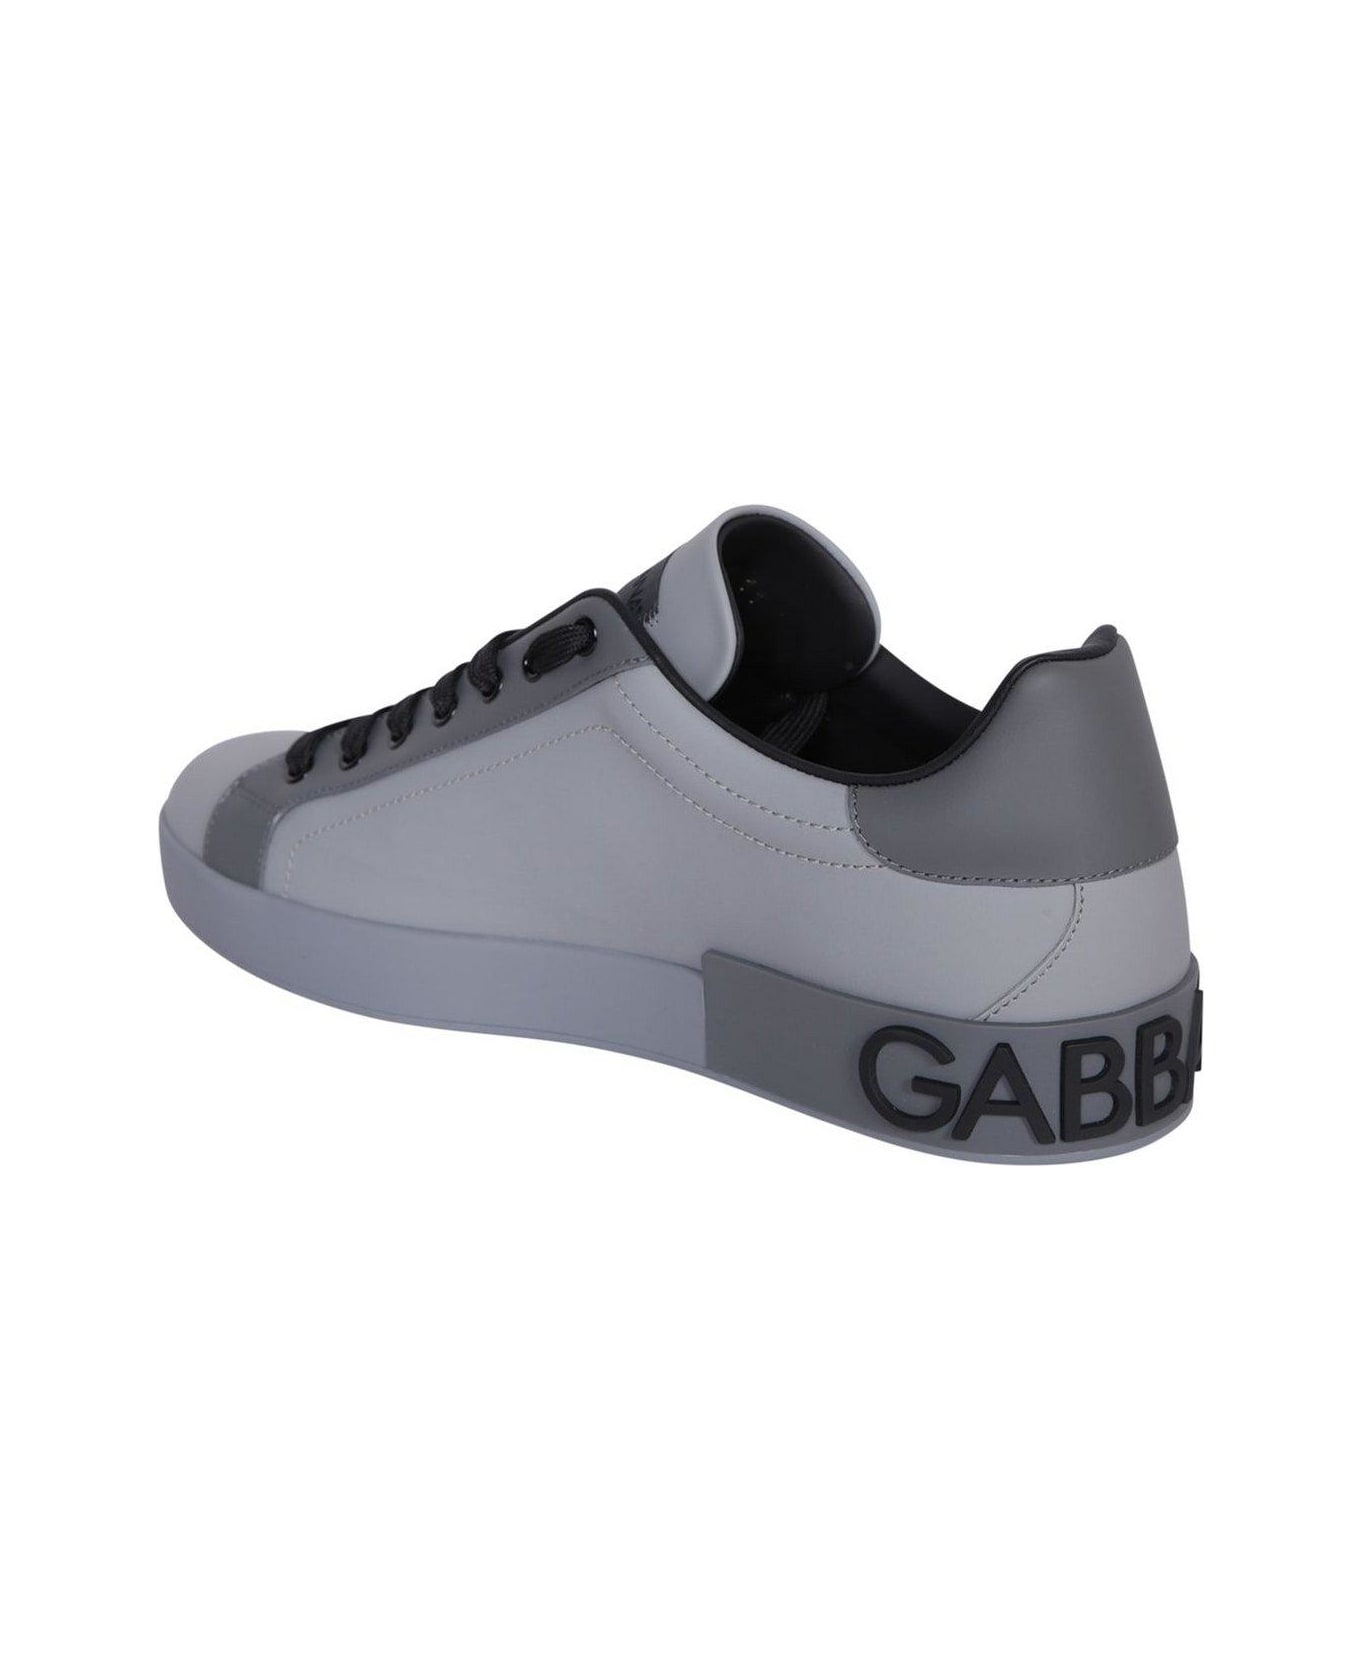 Dolce & Gabbana Portofino Lace-up Sneakers - GREY/BLACK